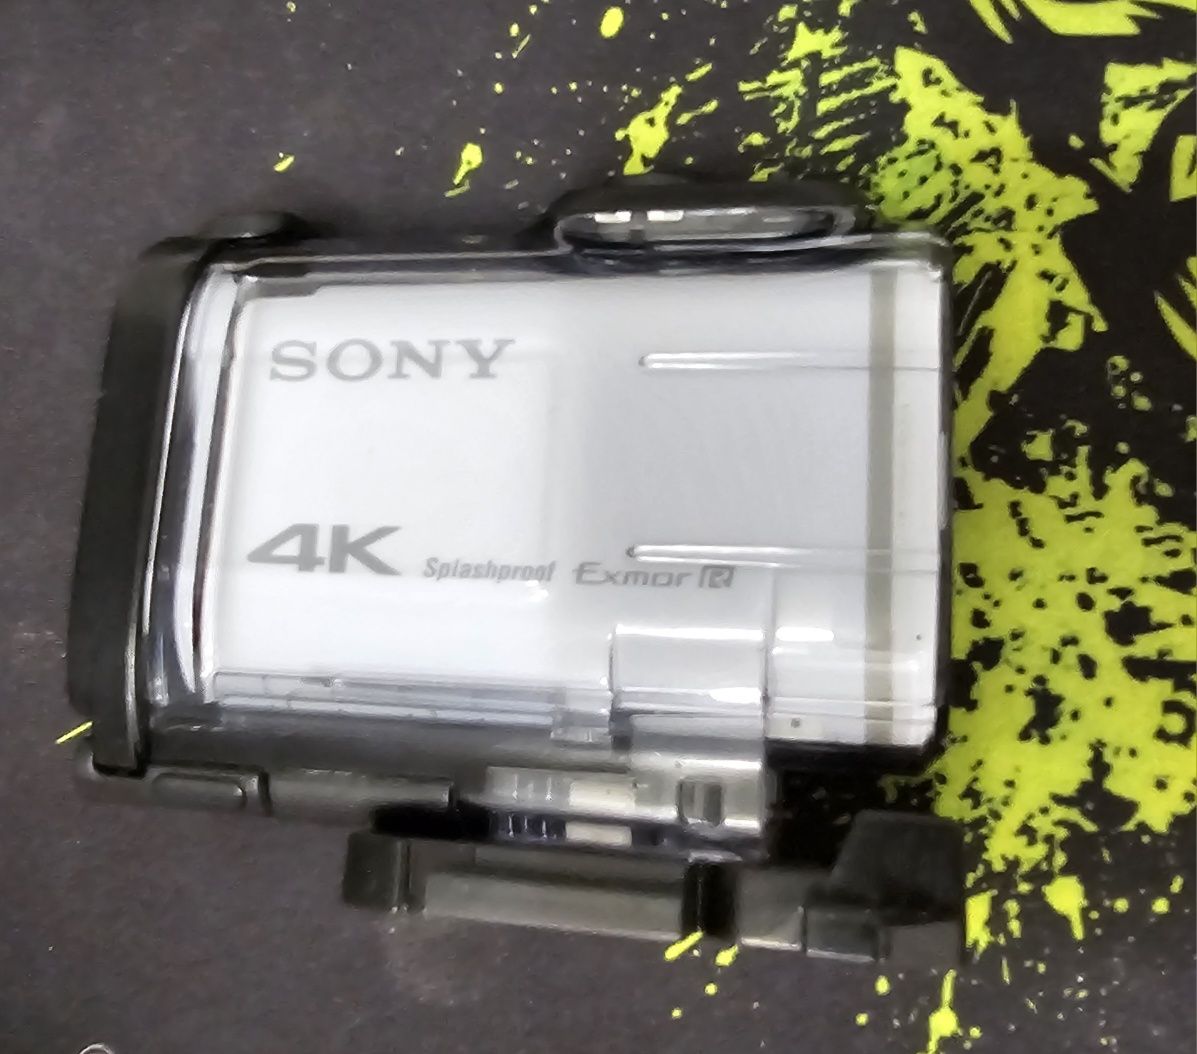 Sony FDR-X1000V 4K - Action camera (екшън камера)